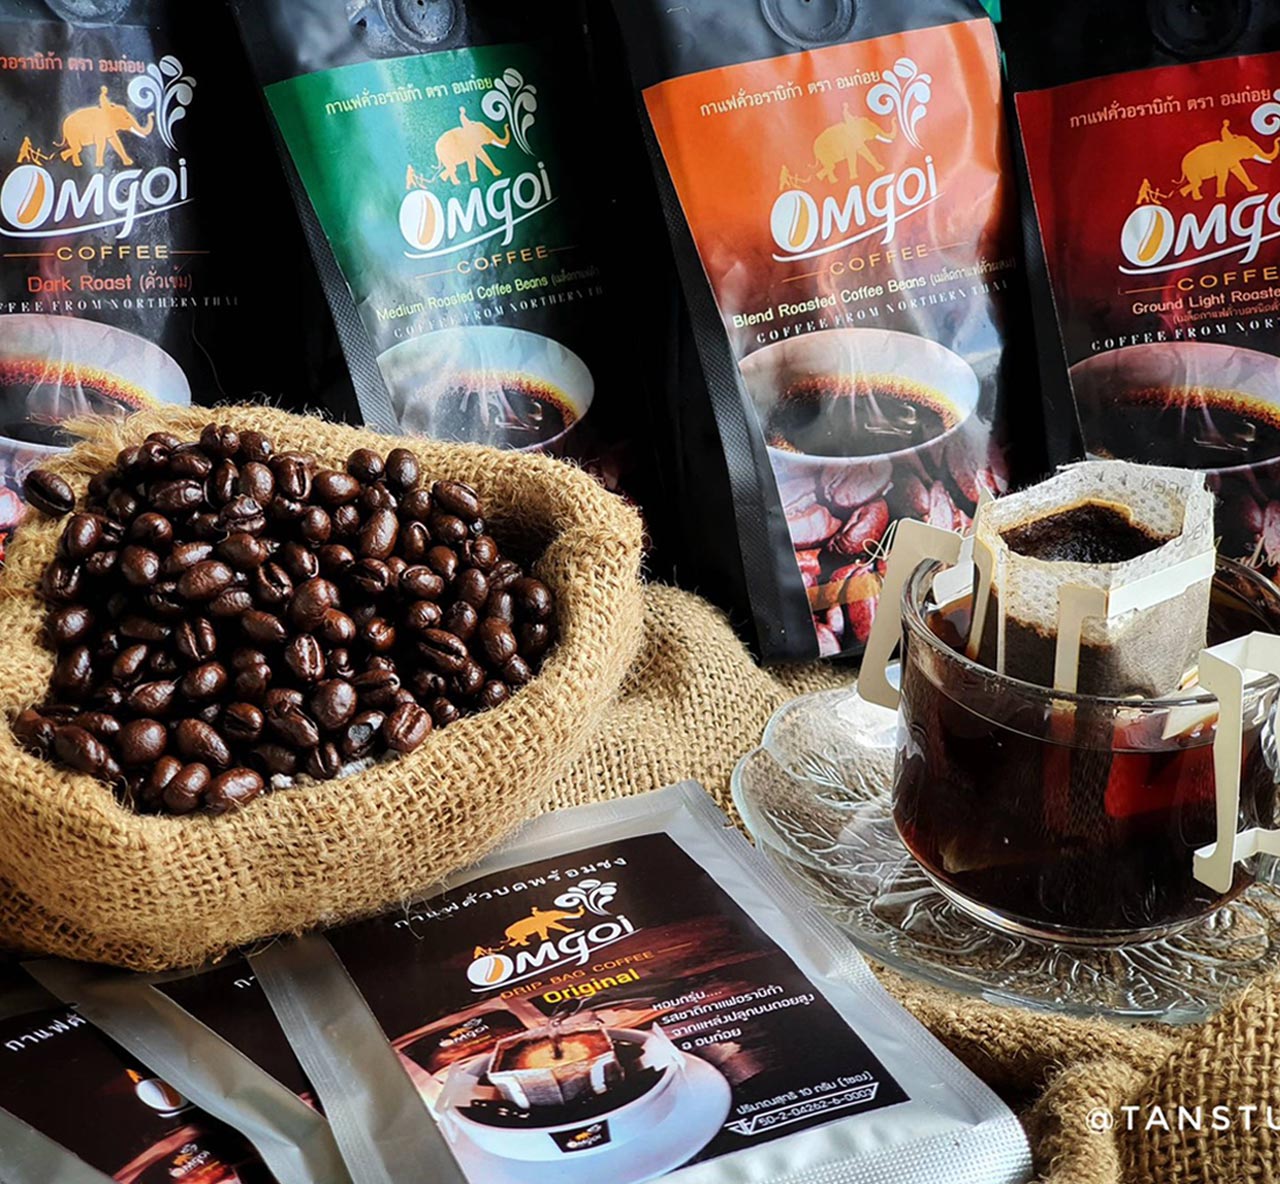 Omgoi Coffee